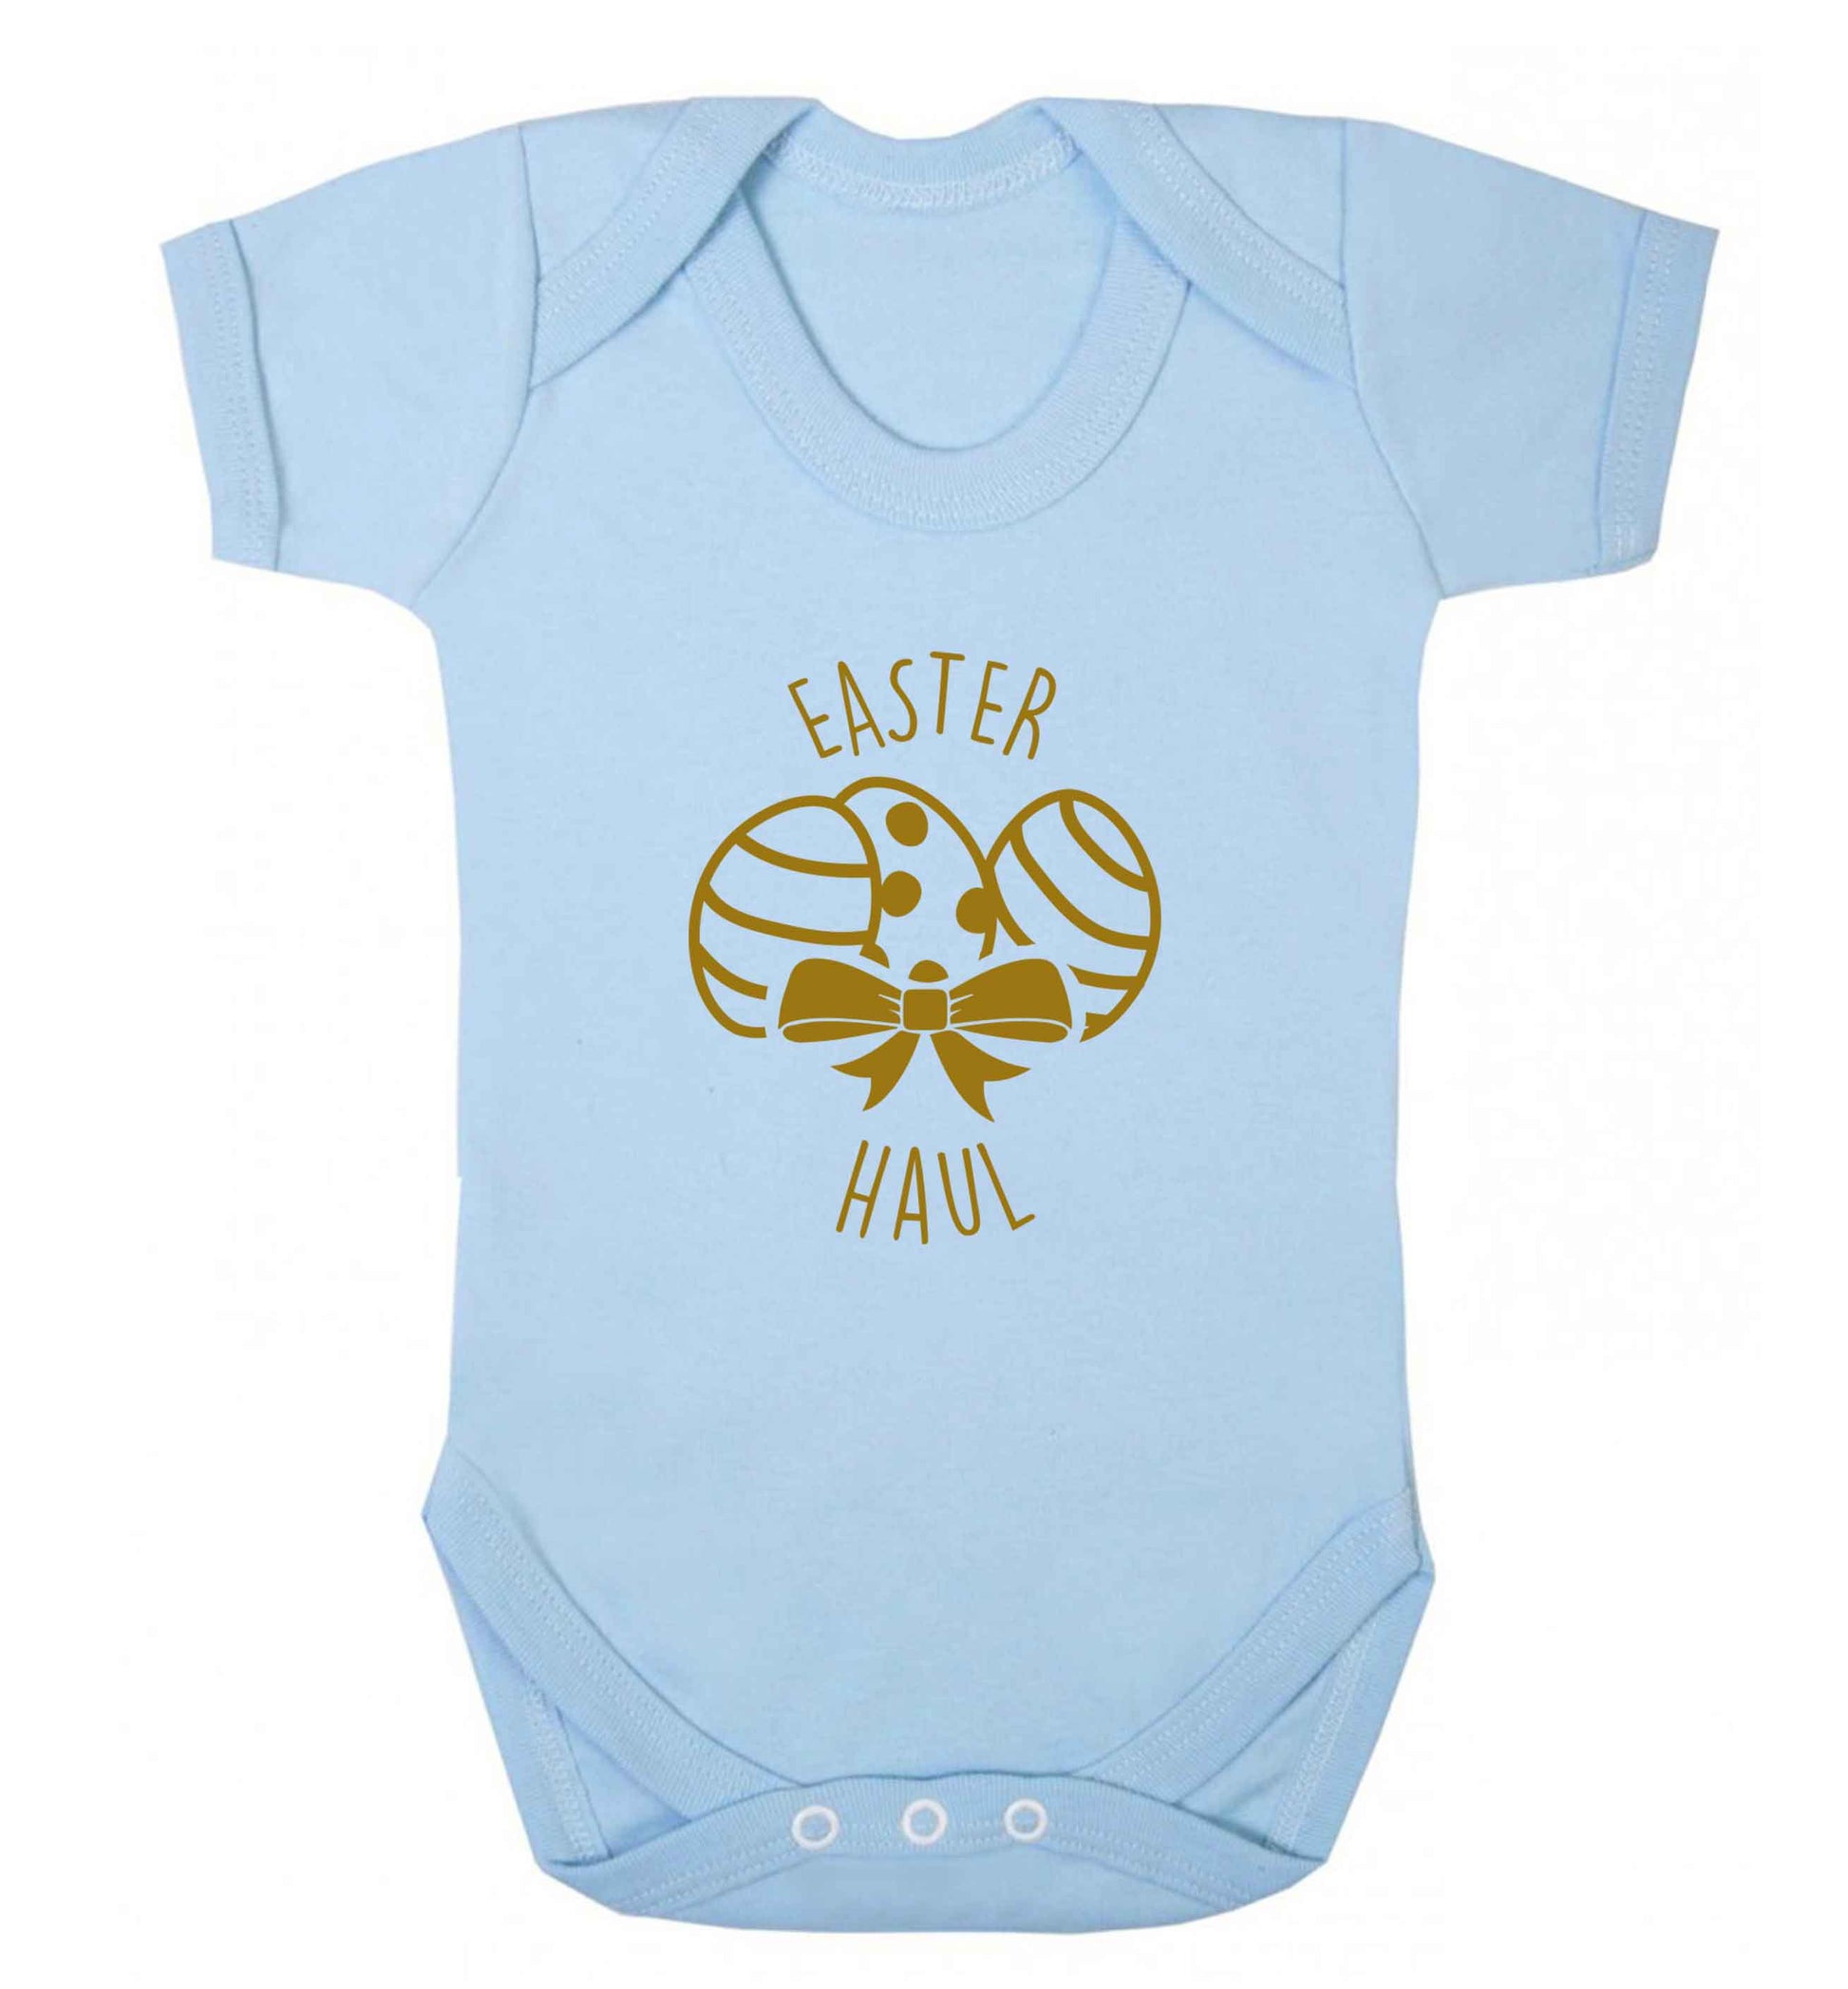 Easter haul baby vest pale blue 18-24 months